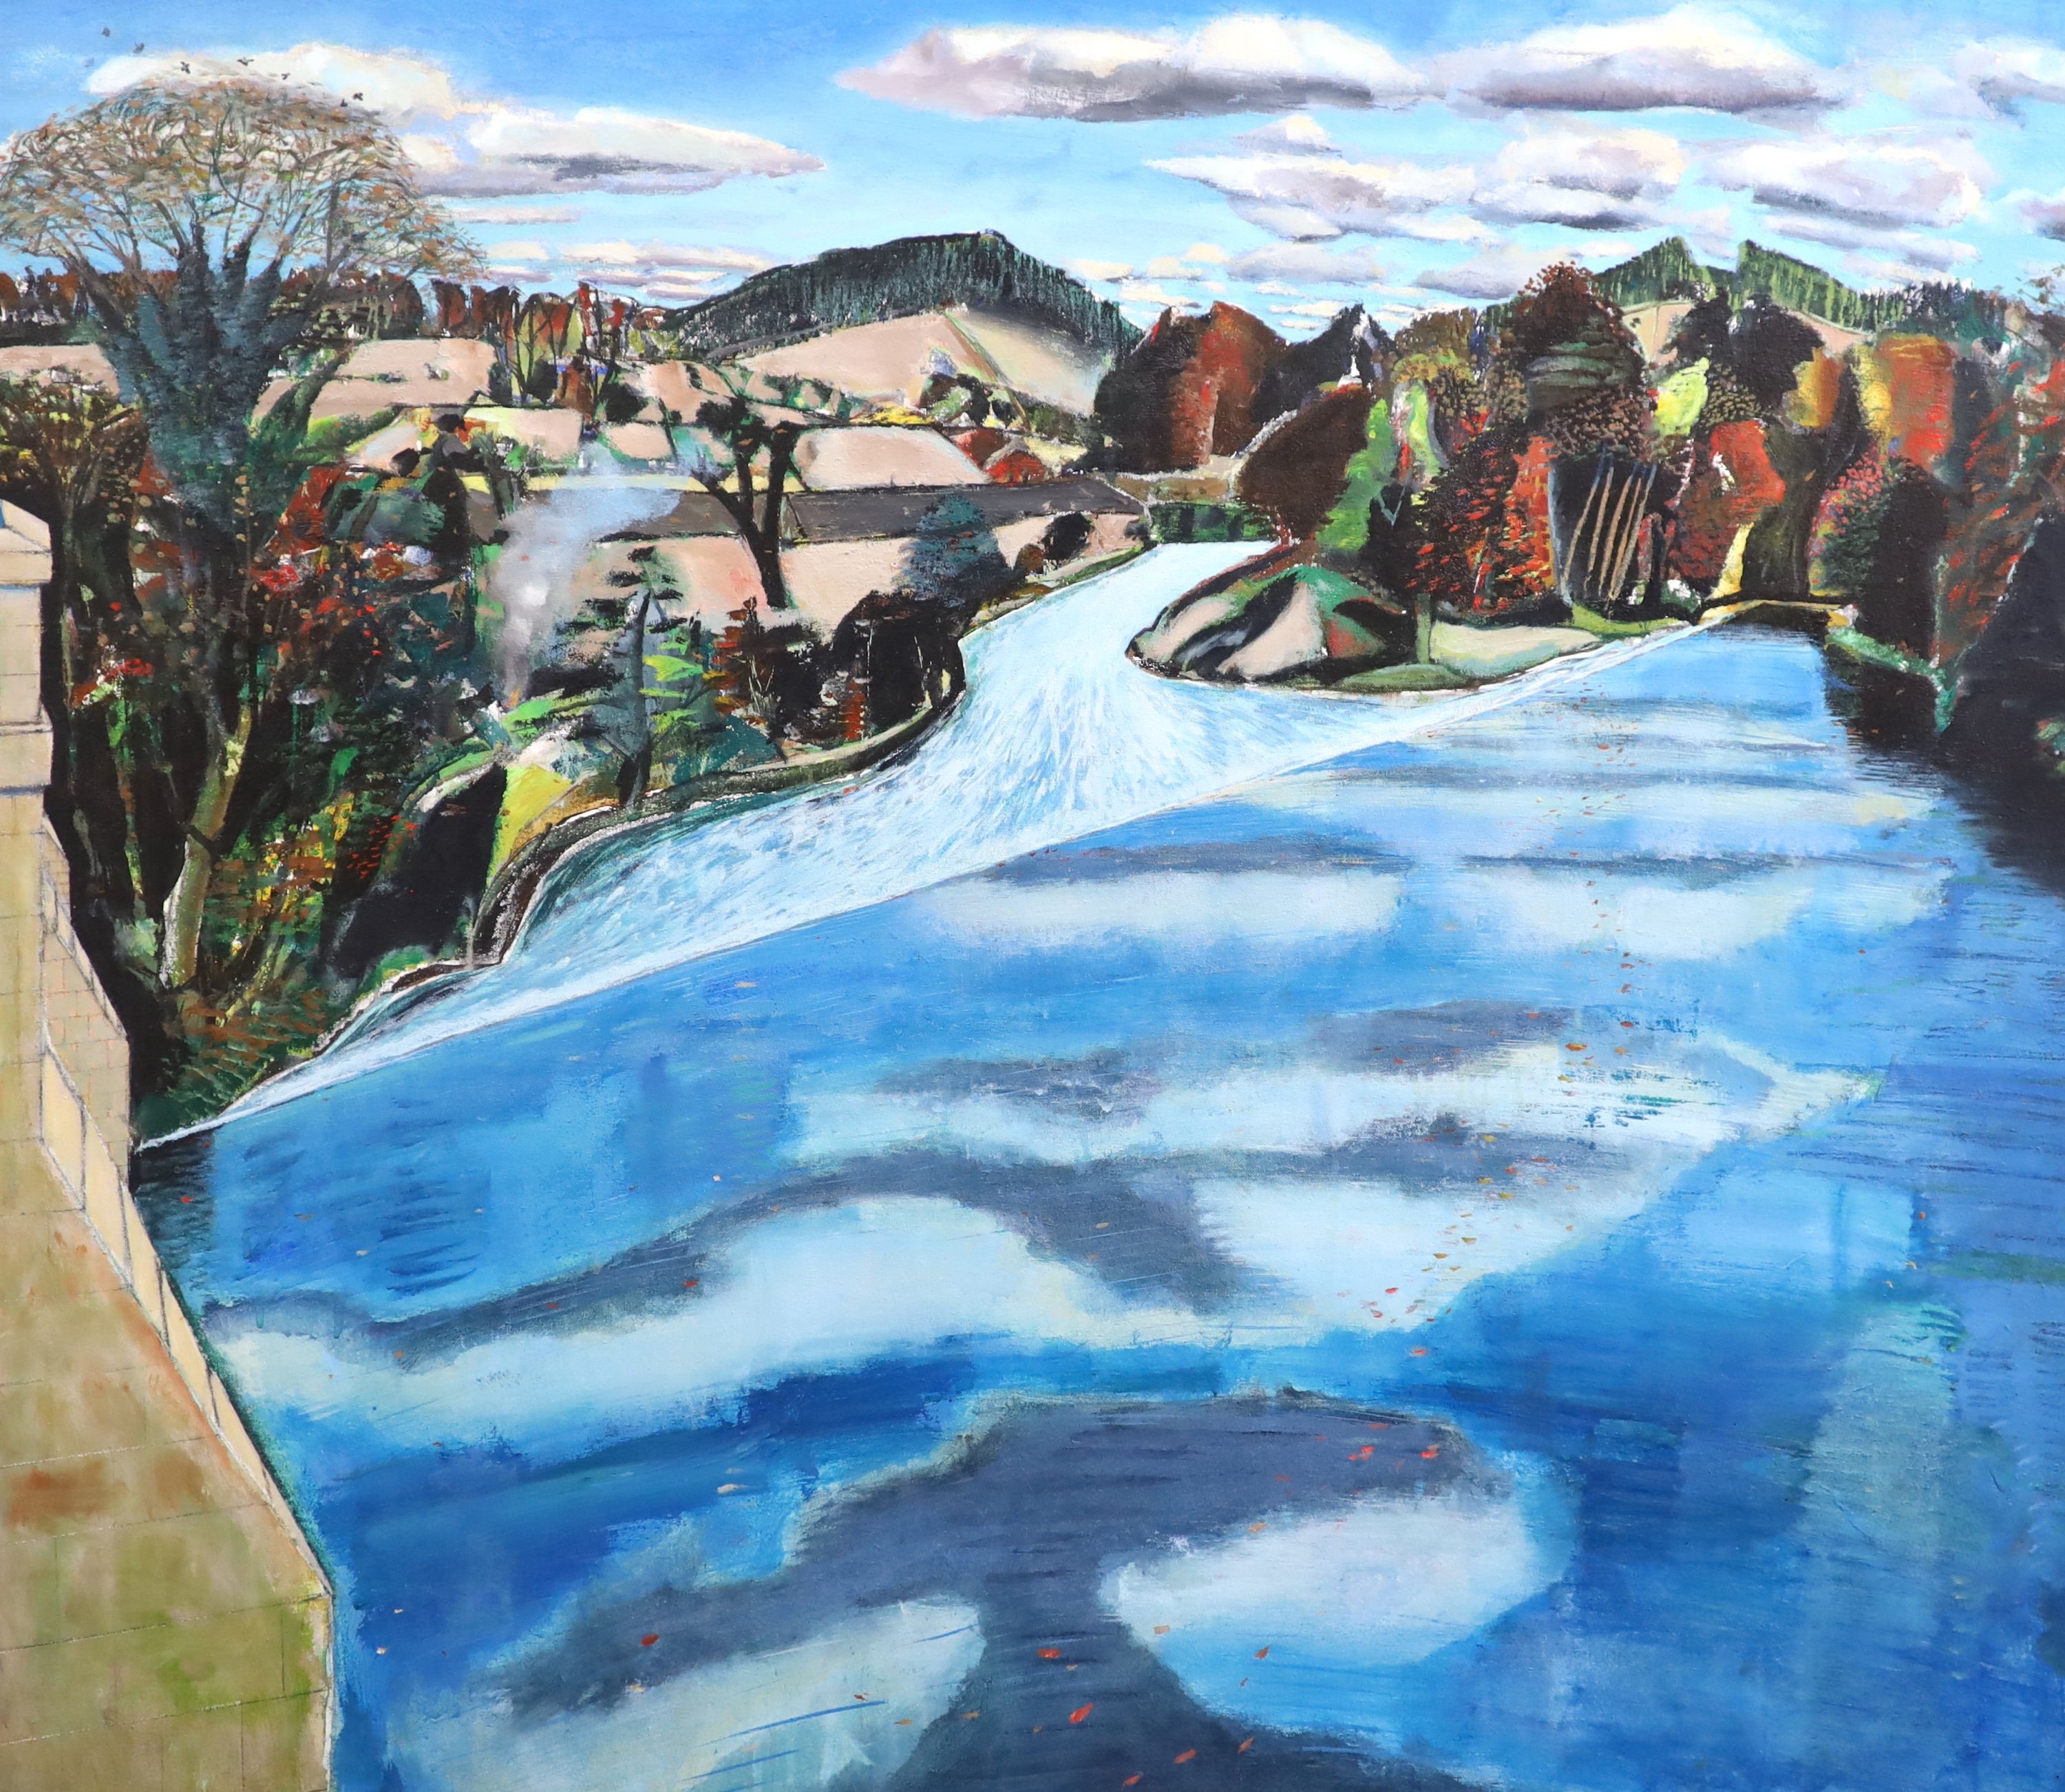 Keith Grant (b.1930), 'Chollerford Weir', 1980, Oil on canvas laid on board, 106 x 120cm.